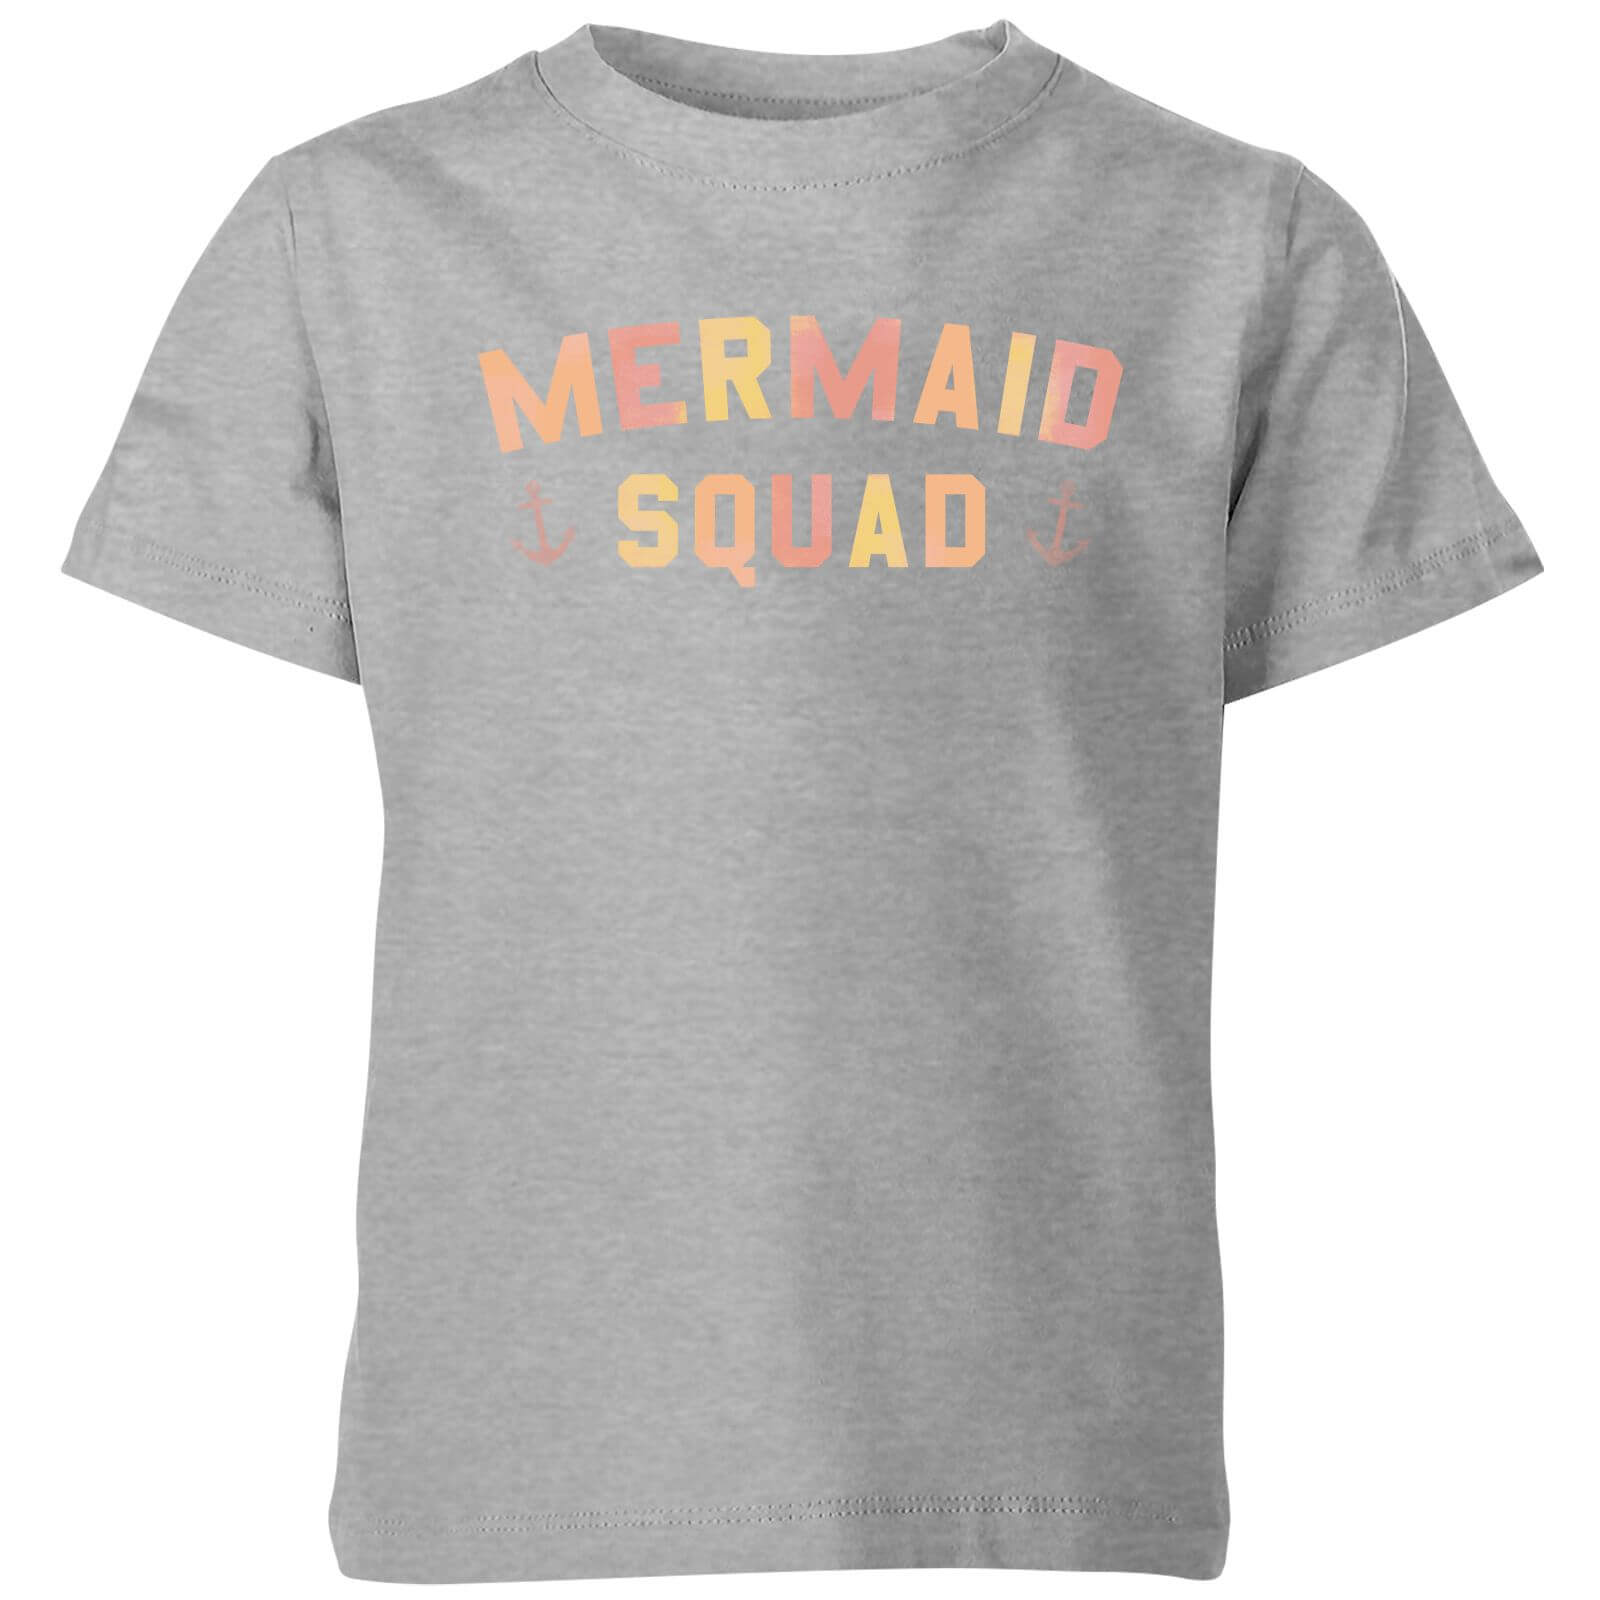 My Little Rascal Mermaid Squad Kids' T-Shirt - Grey - 3-4 Years - Grey